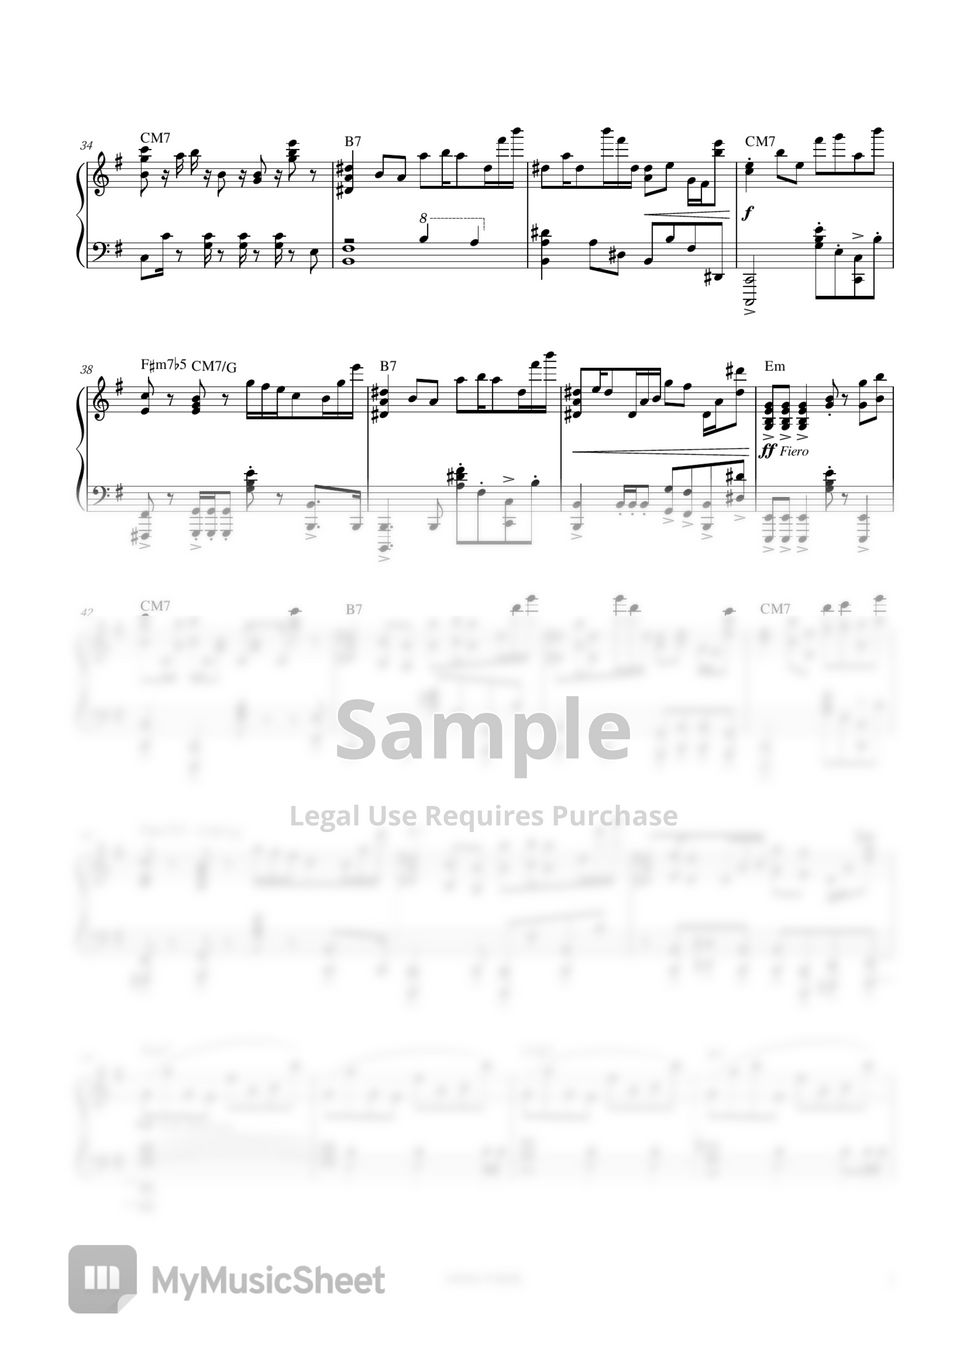 Free Playing God by Polyphia sheet music